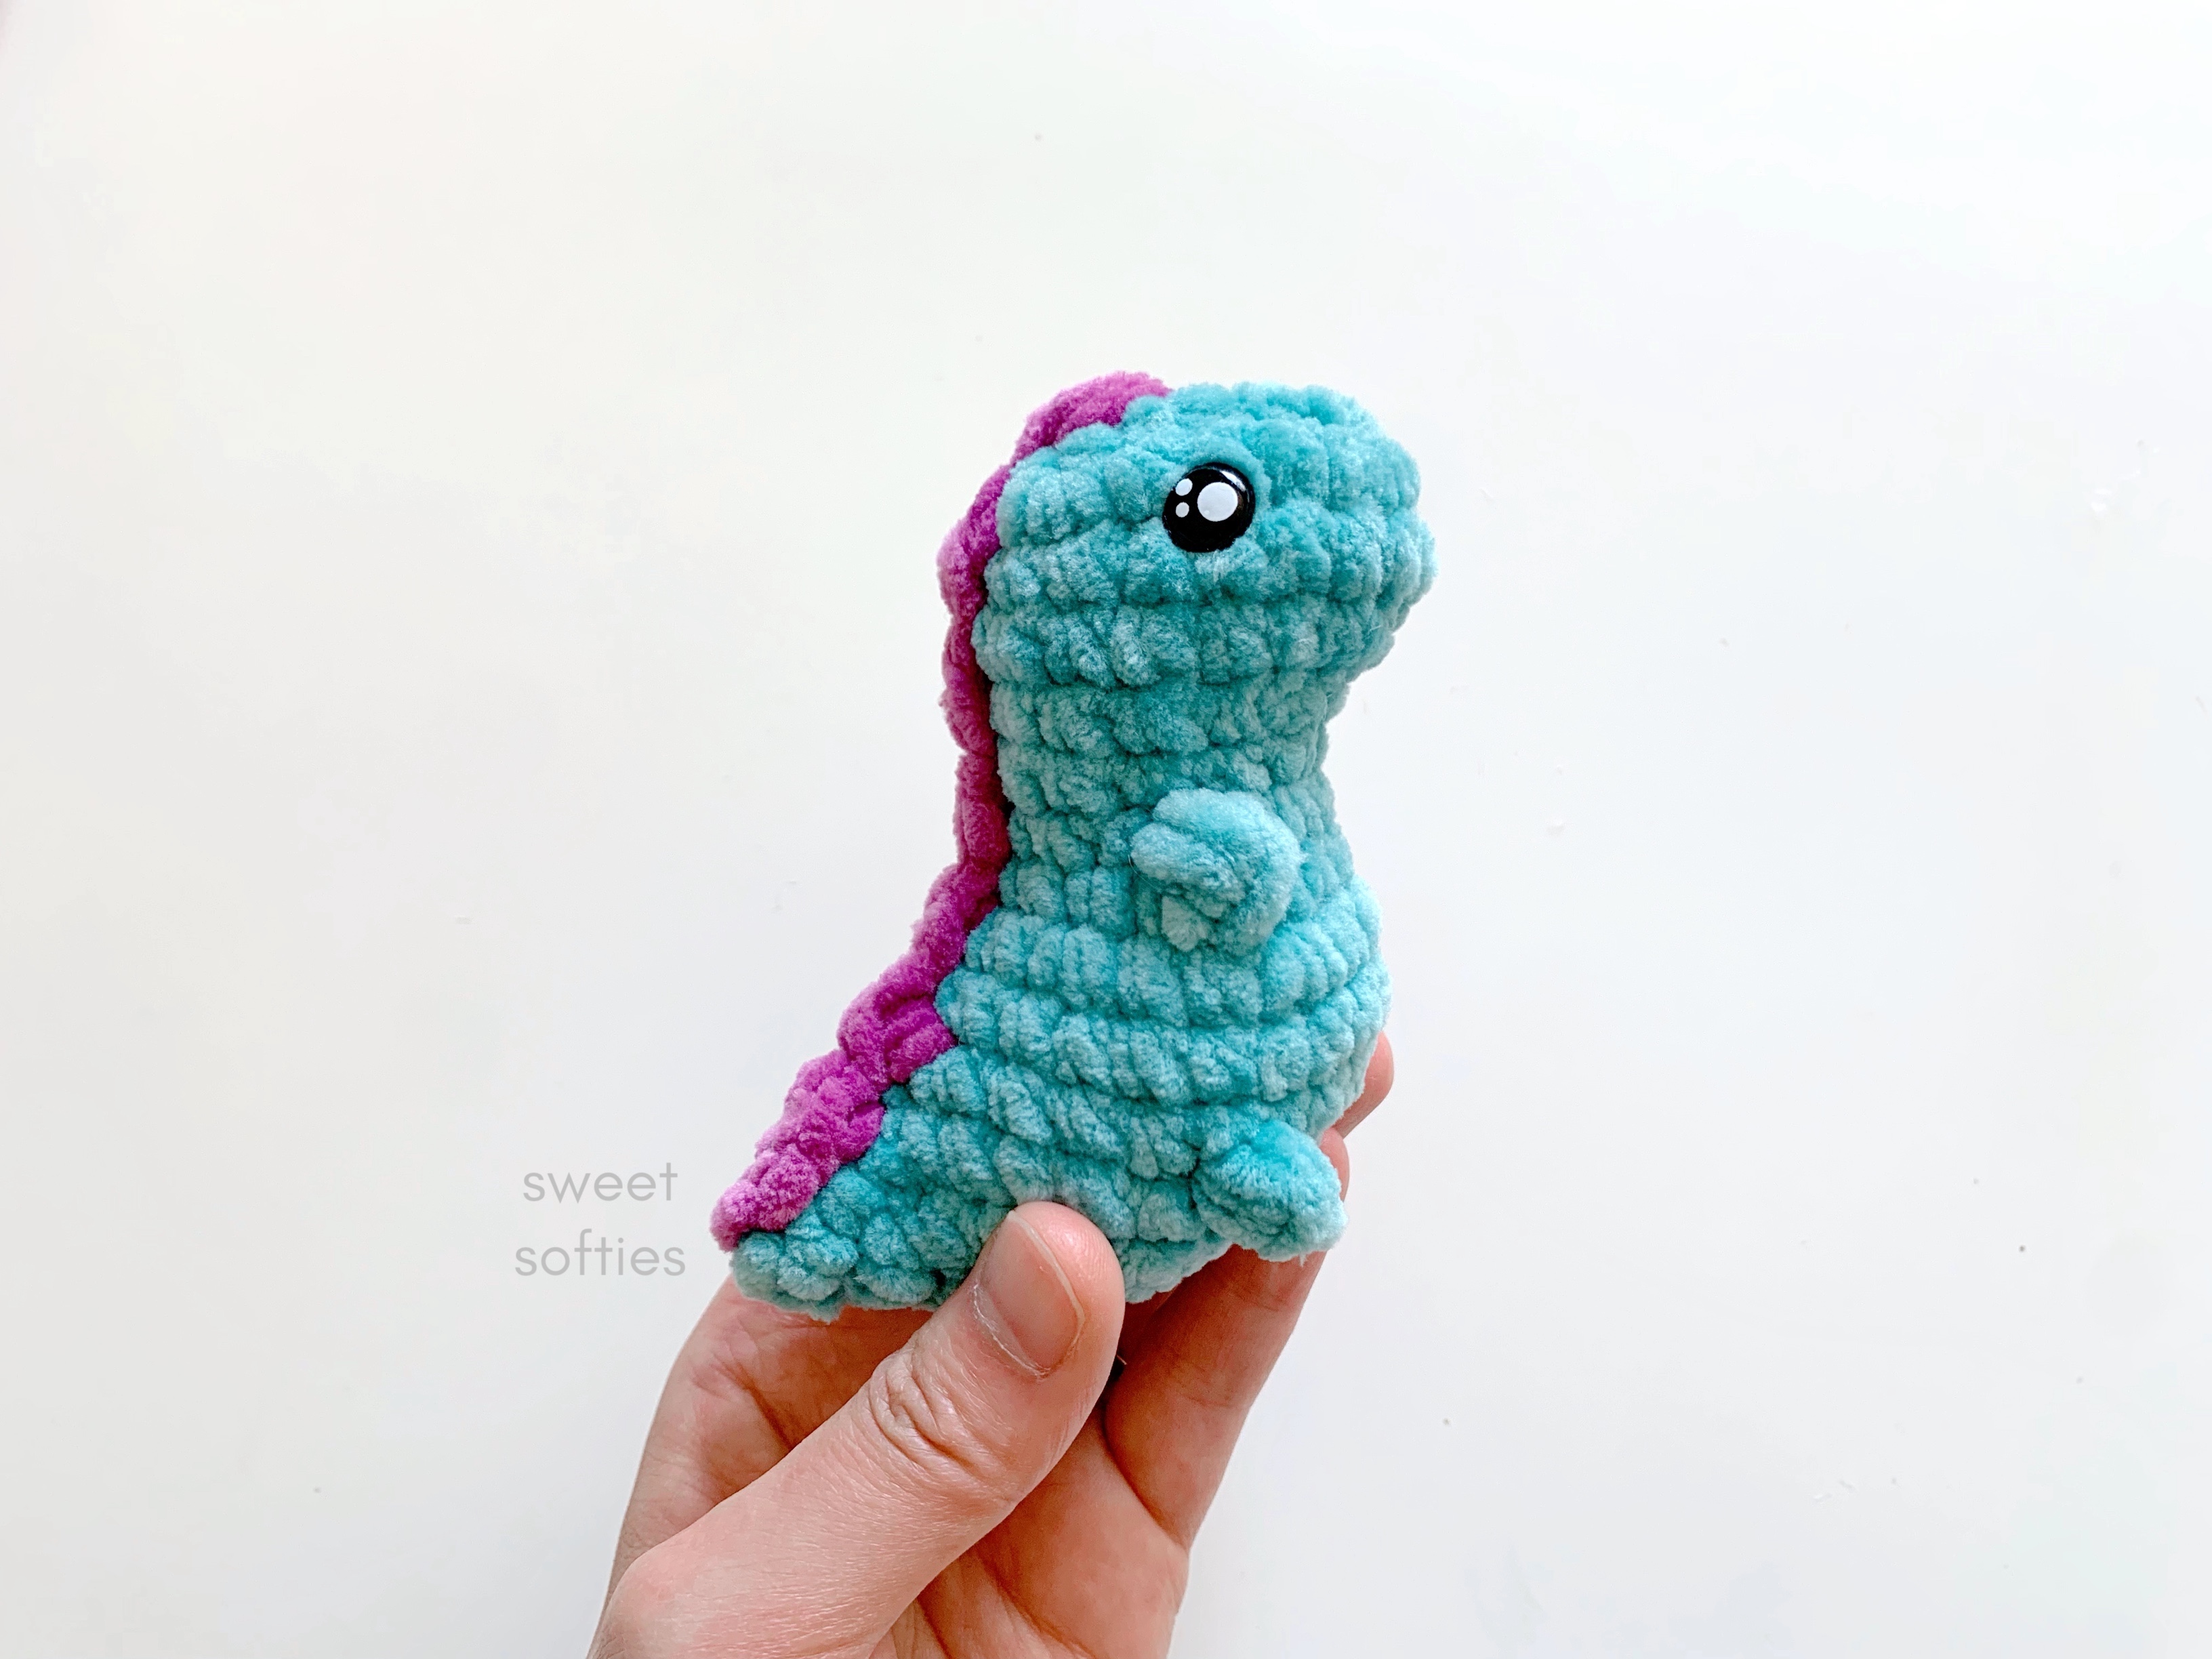 50+ Free Crochet Keychain Pattern Roundup - Sweet Softies